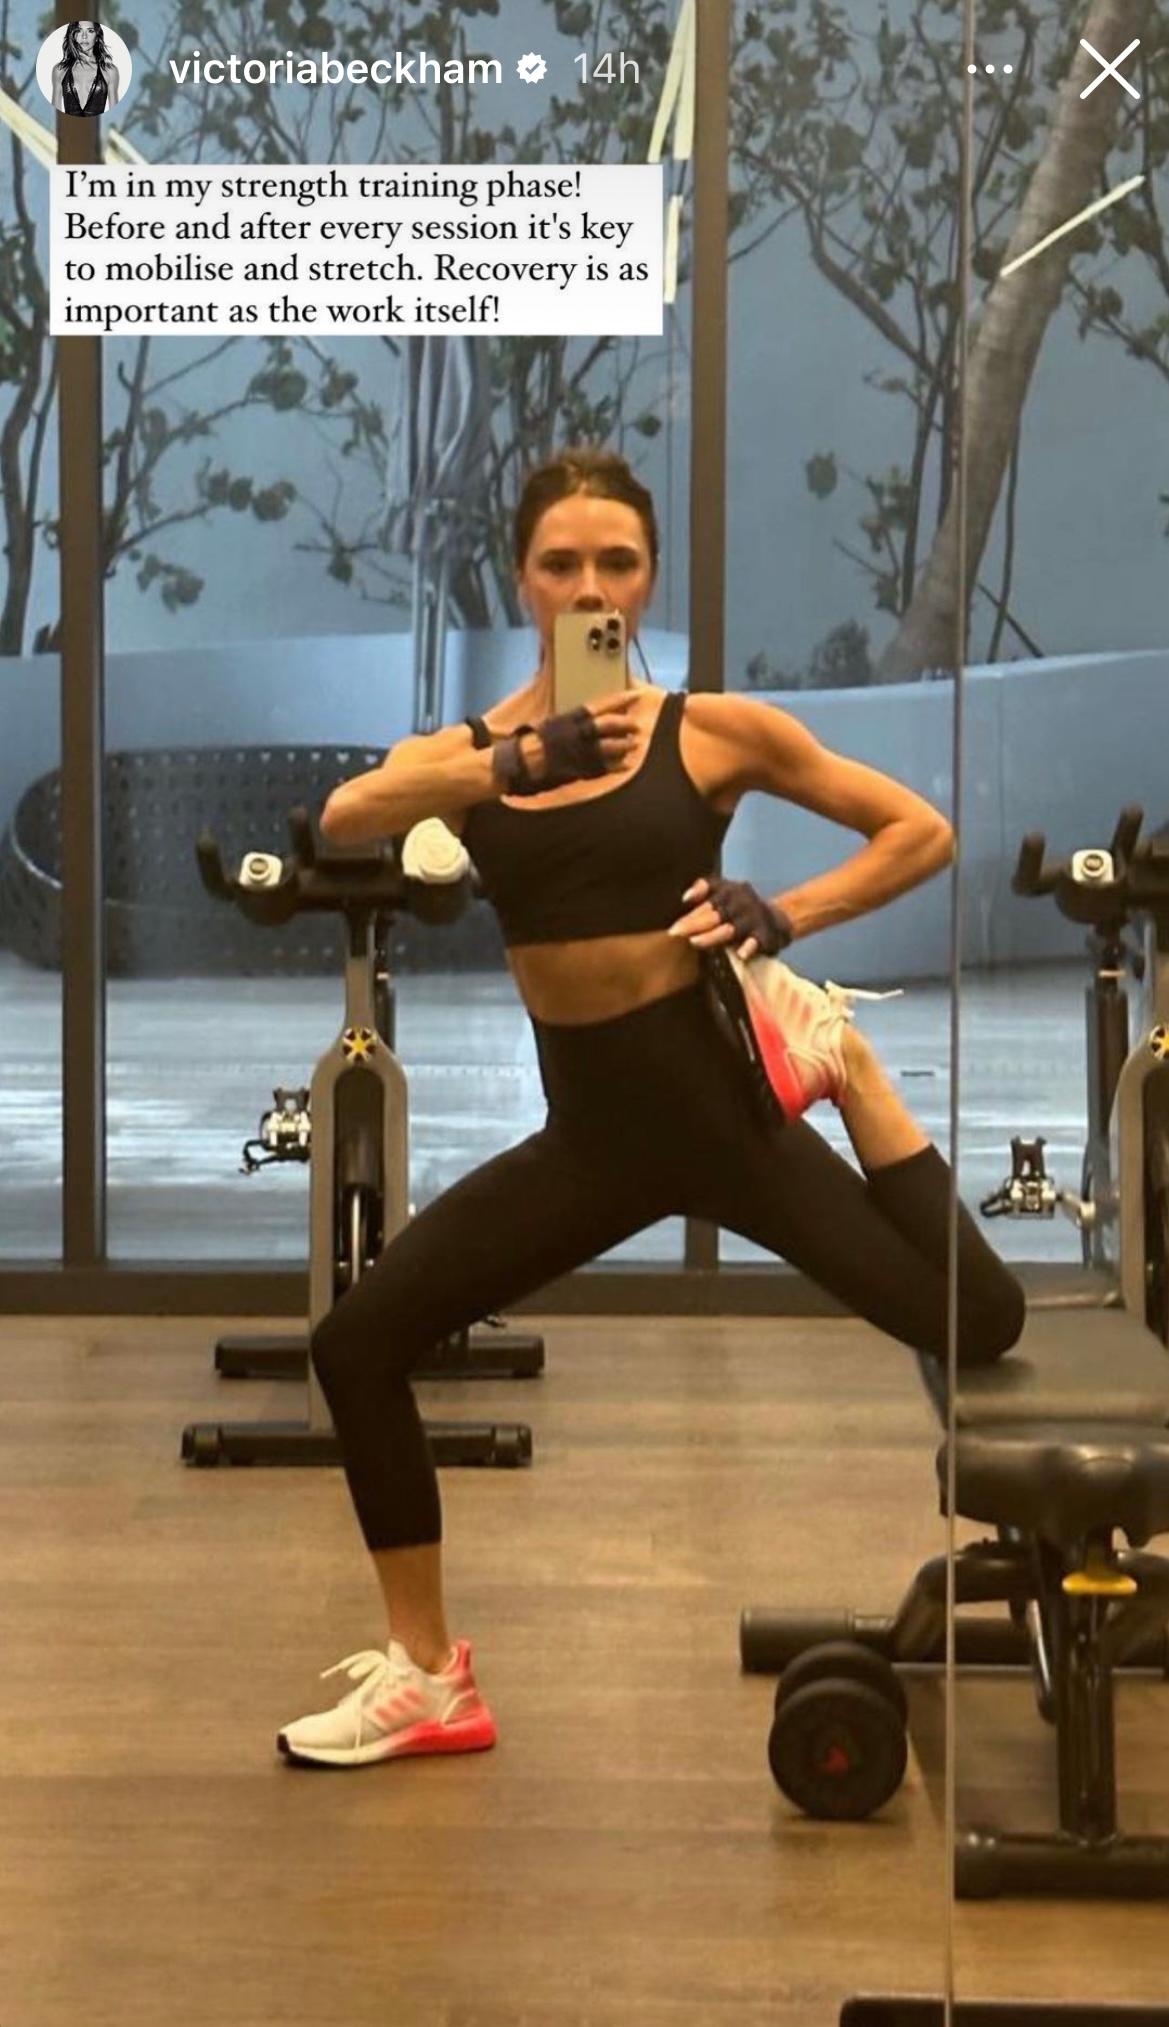 Victoria Beckham's fitness regimen